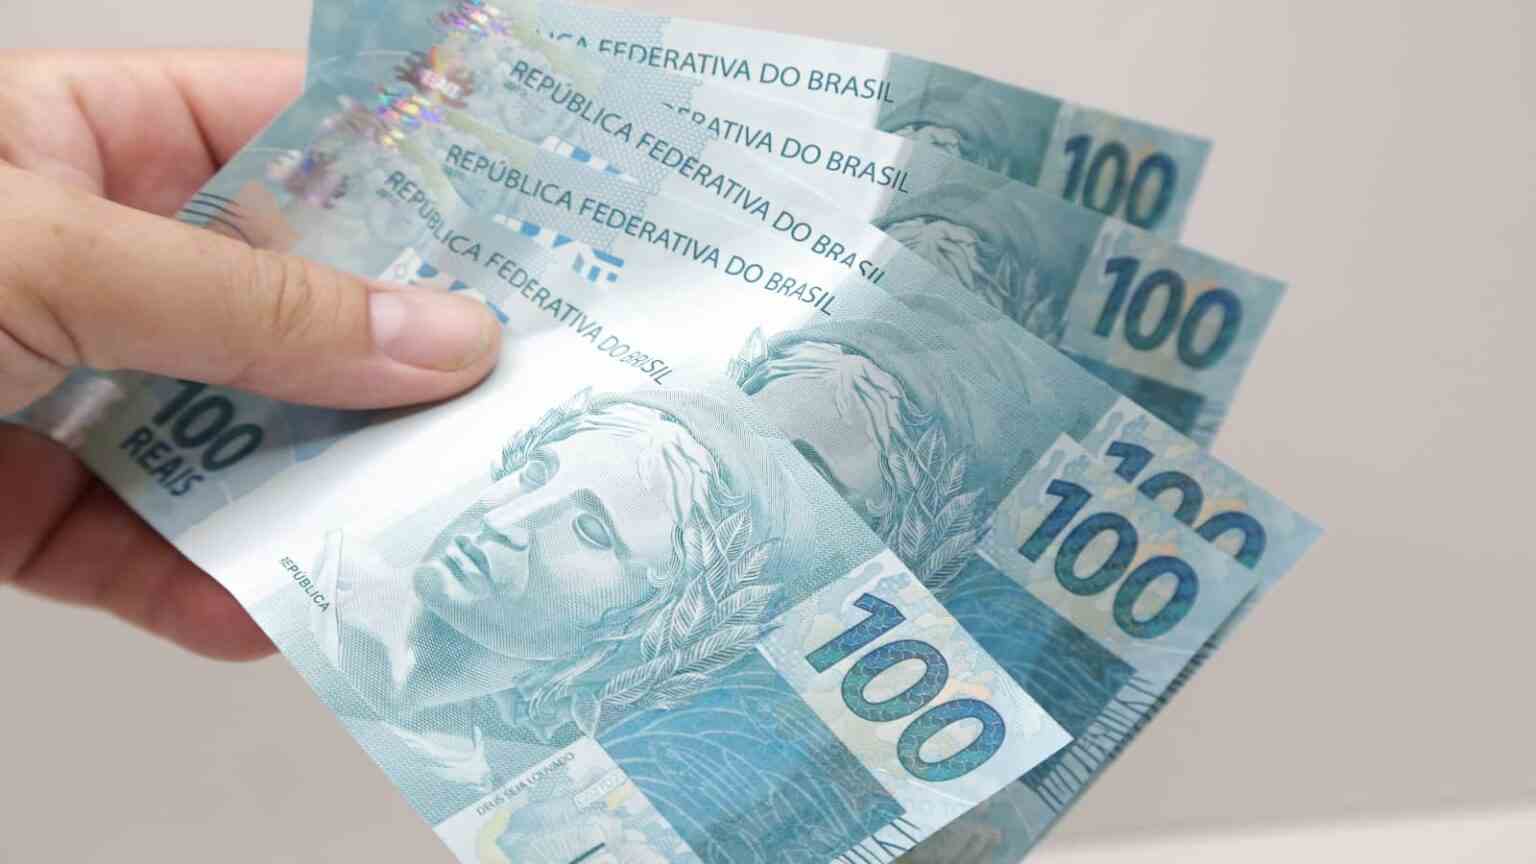 100 Brazilian Real Banknotes